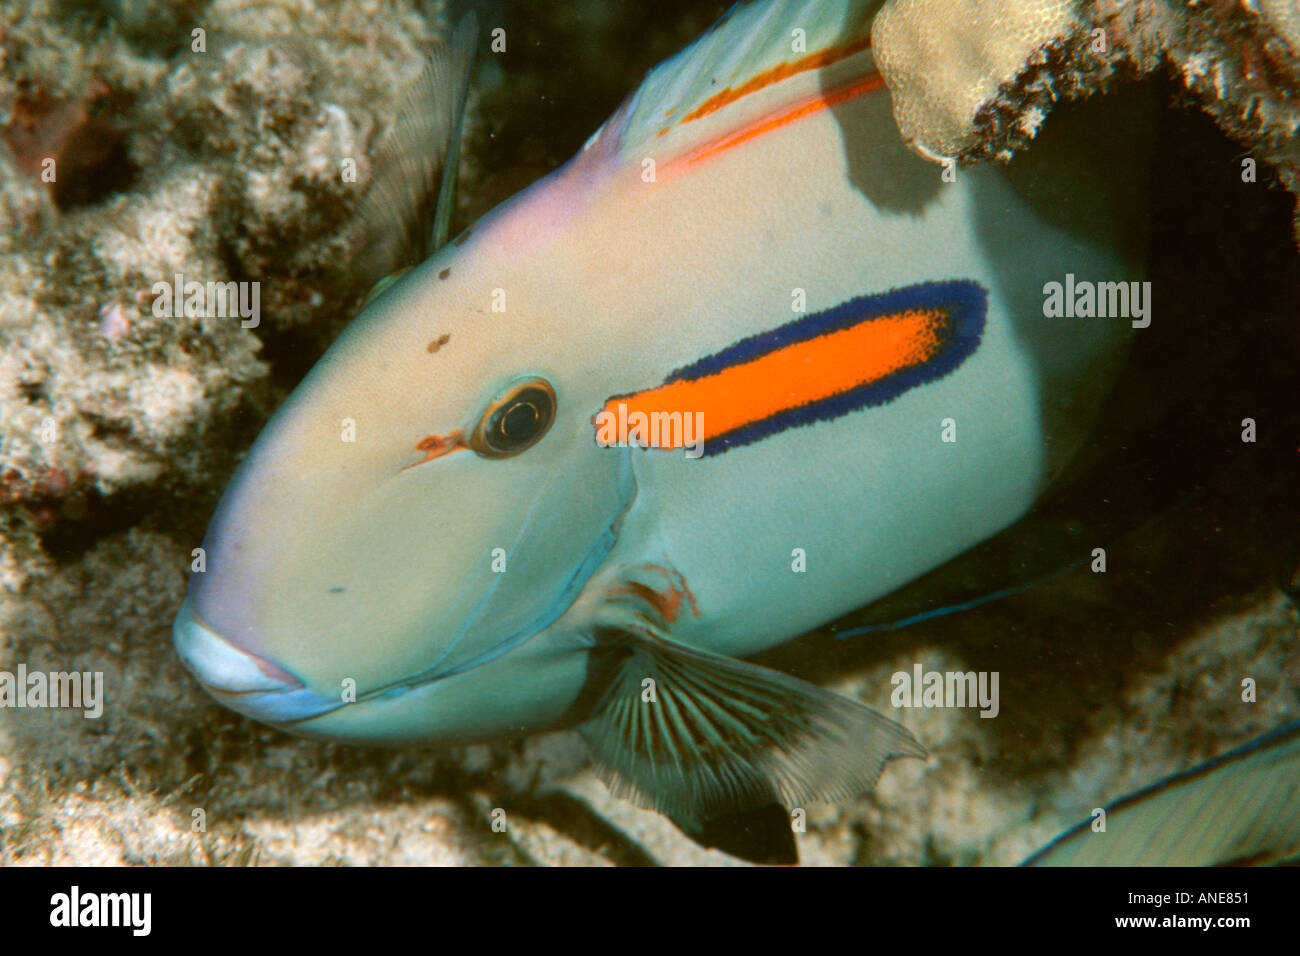 Orangeband surgeonfish Acanthurus olivaceus Kailua Kona Hawaii N Pacific  Stock Photo